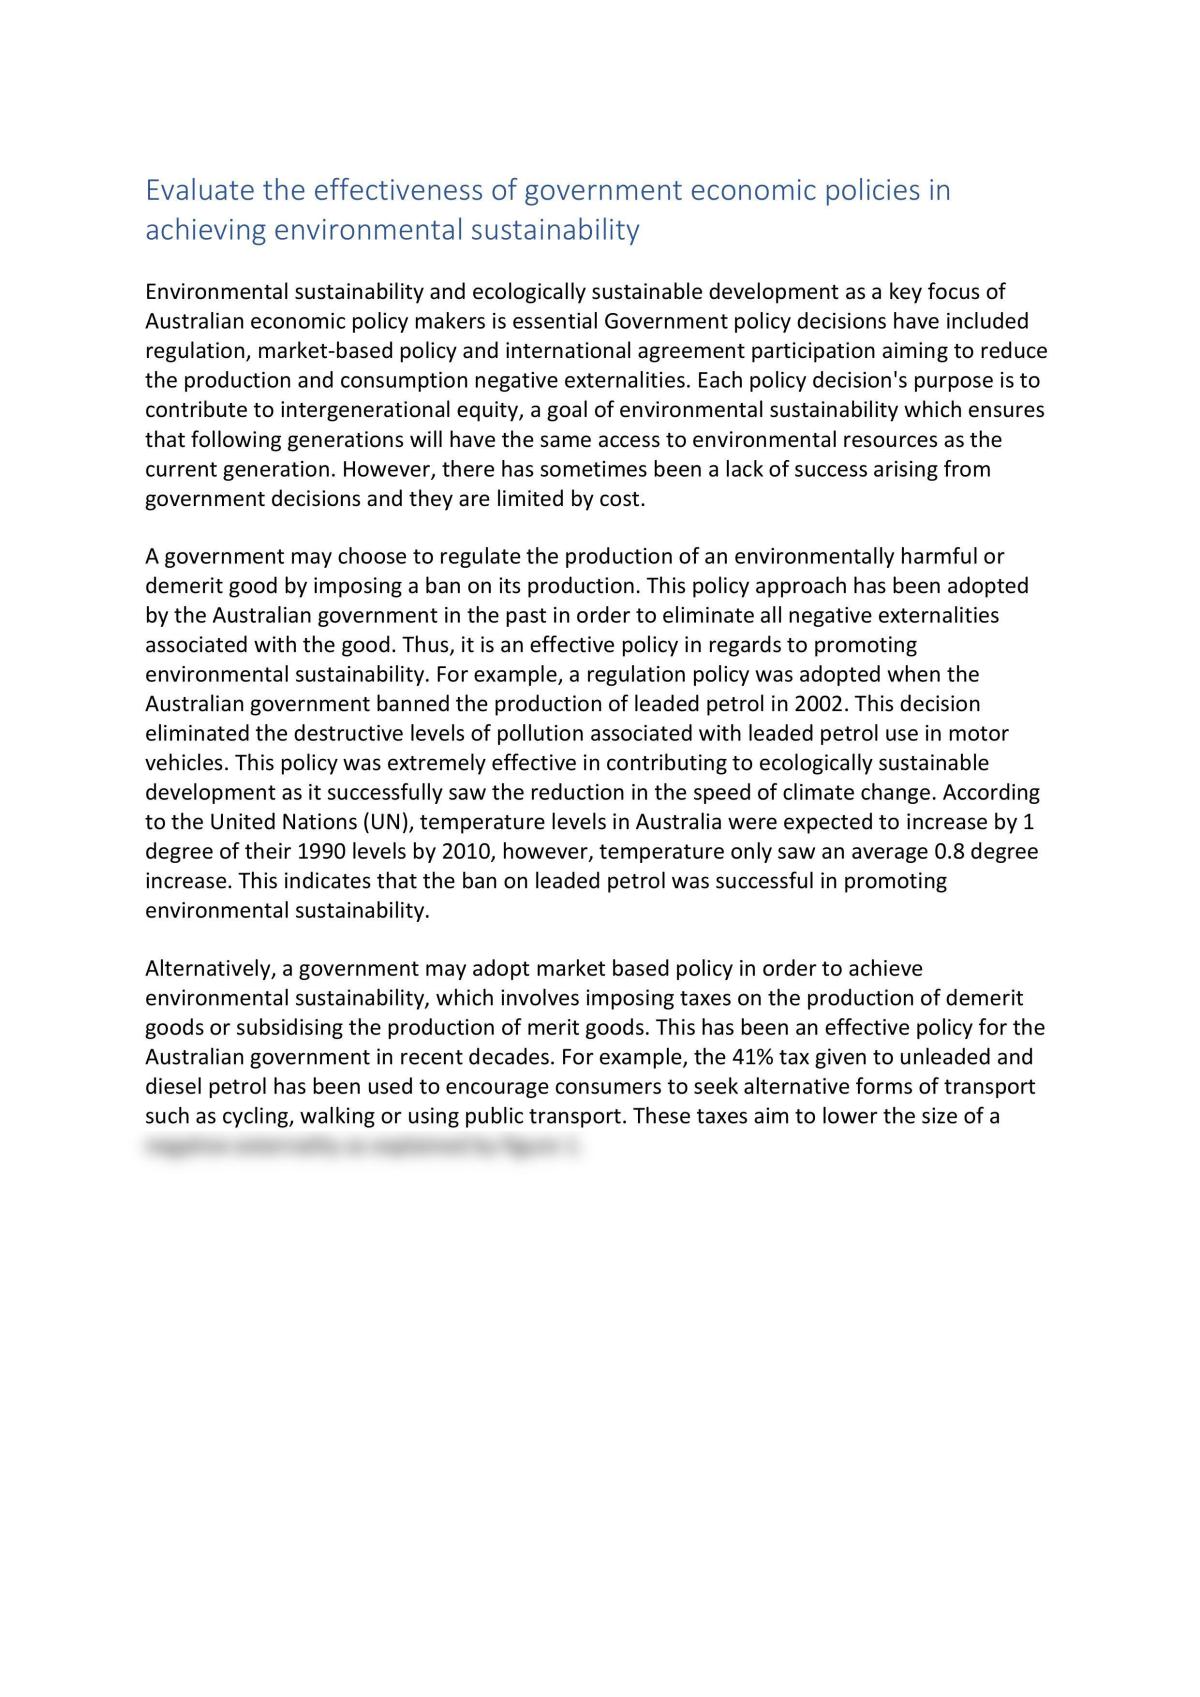 HSC Economics- Environmental Sustainability Essay    - Page 1